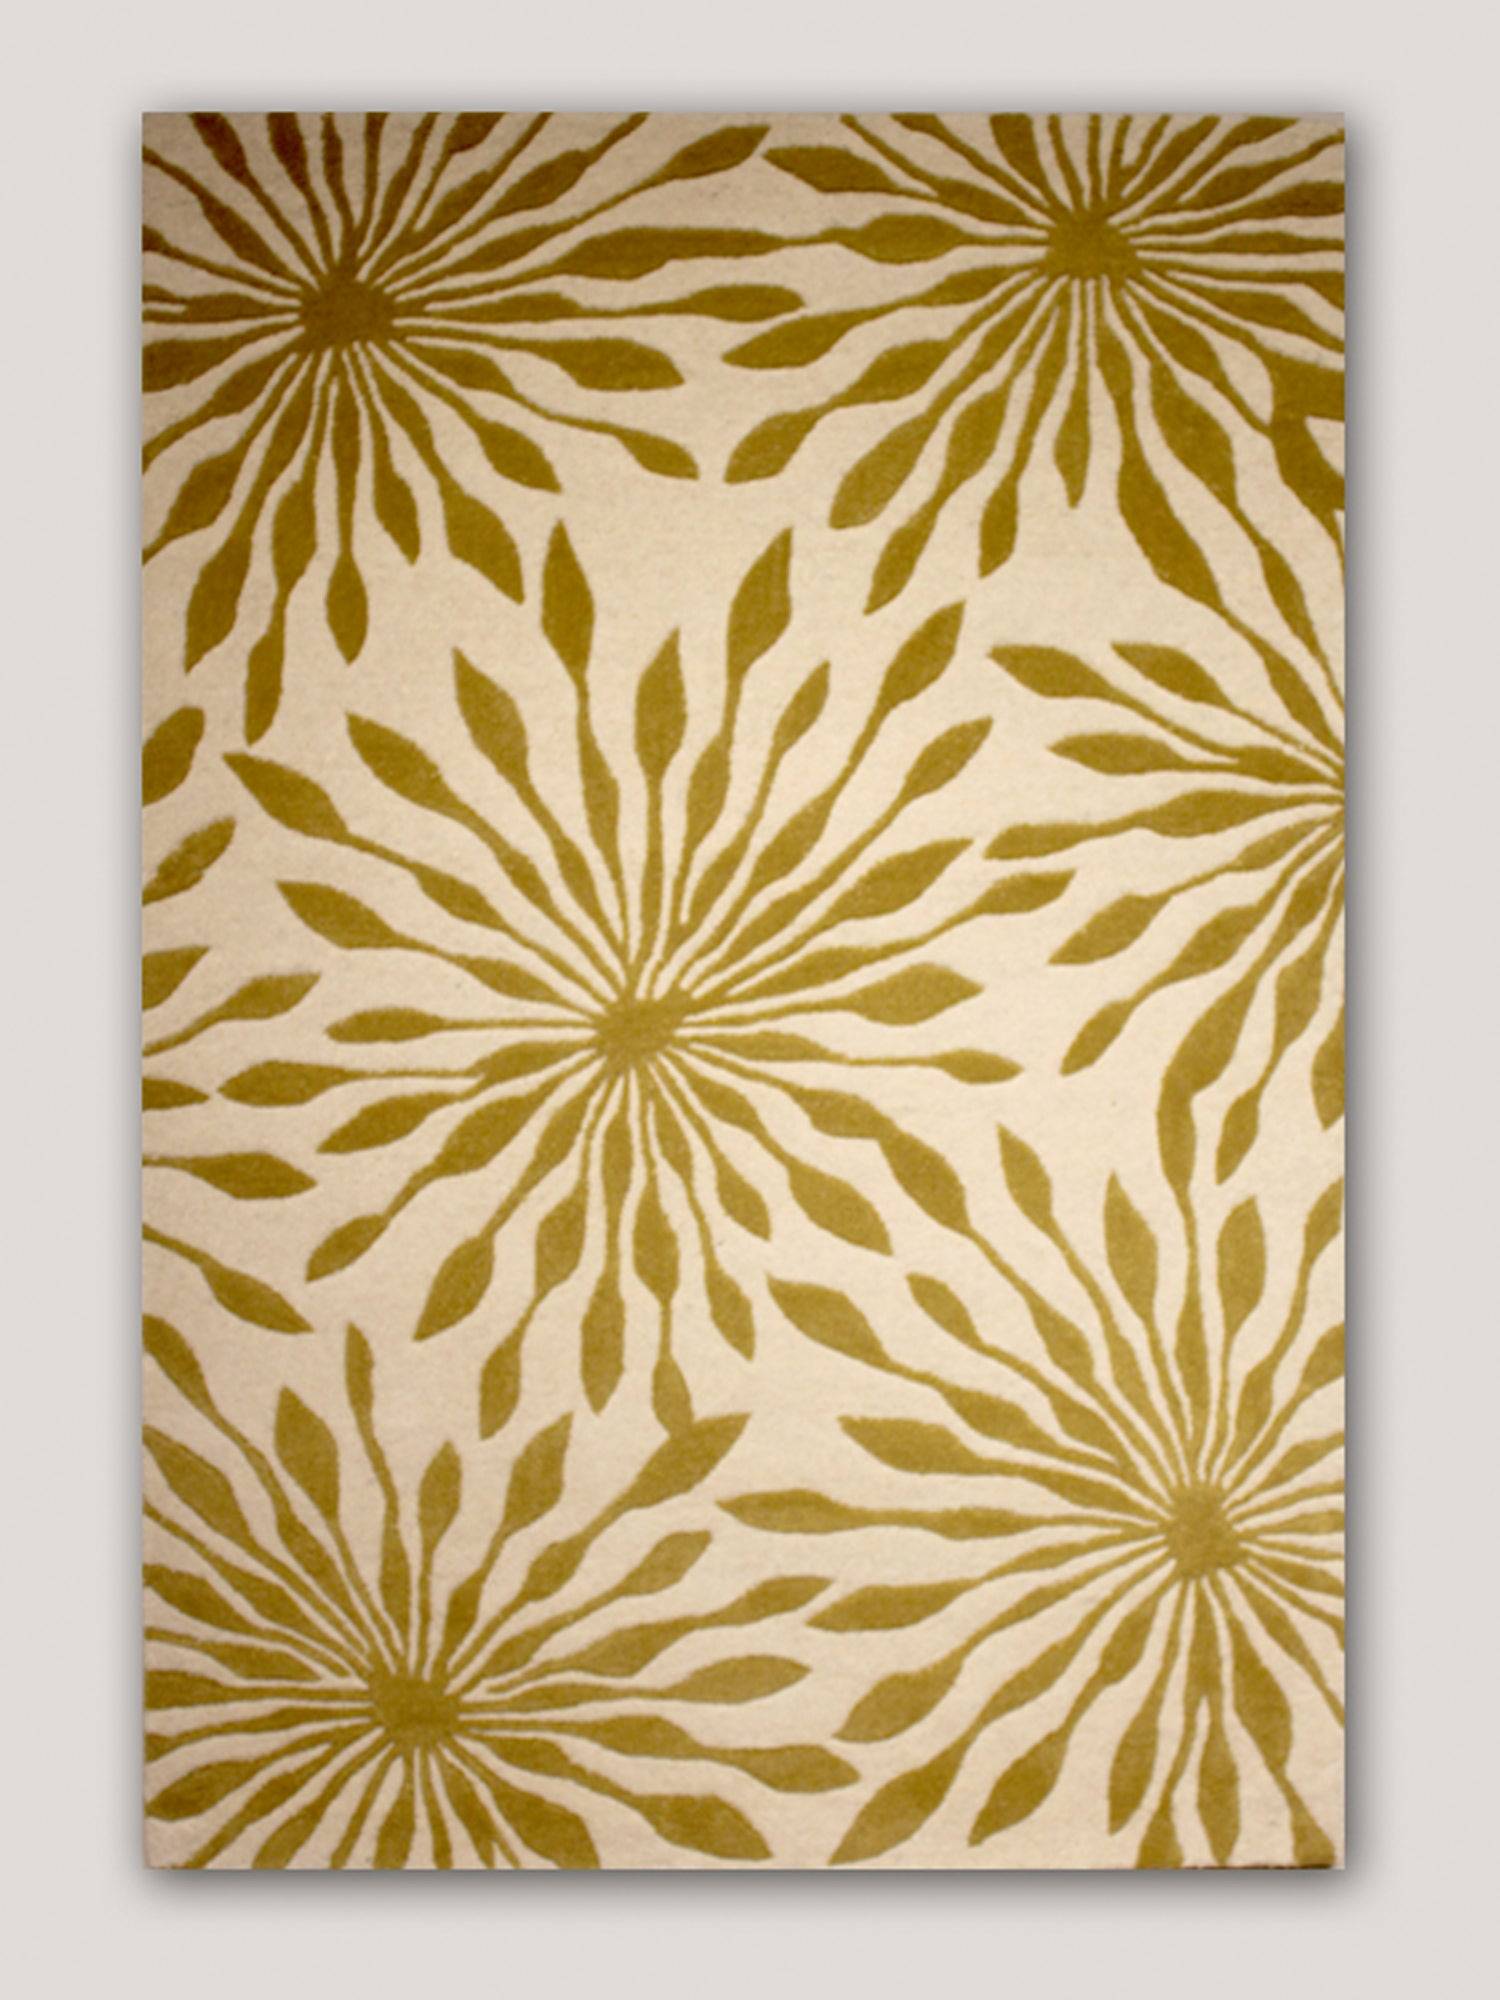 Carpet Hand Tufted 100% Woollen Gold Off White - 4ft X 6ft